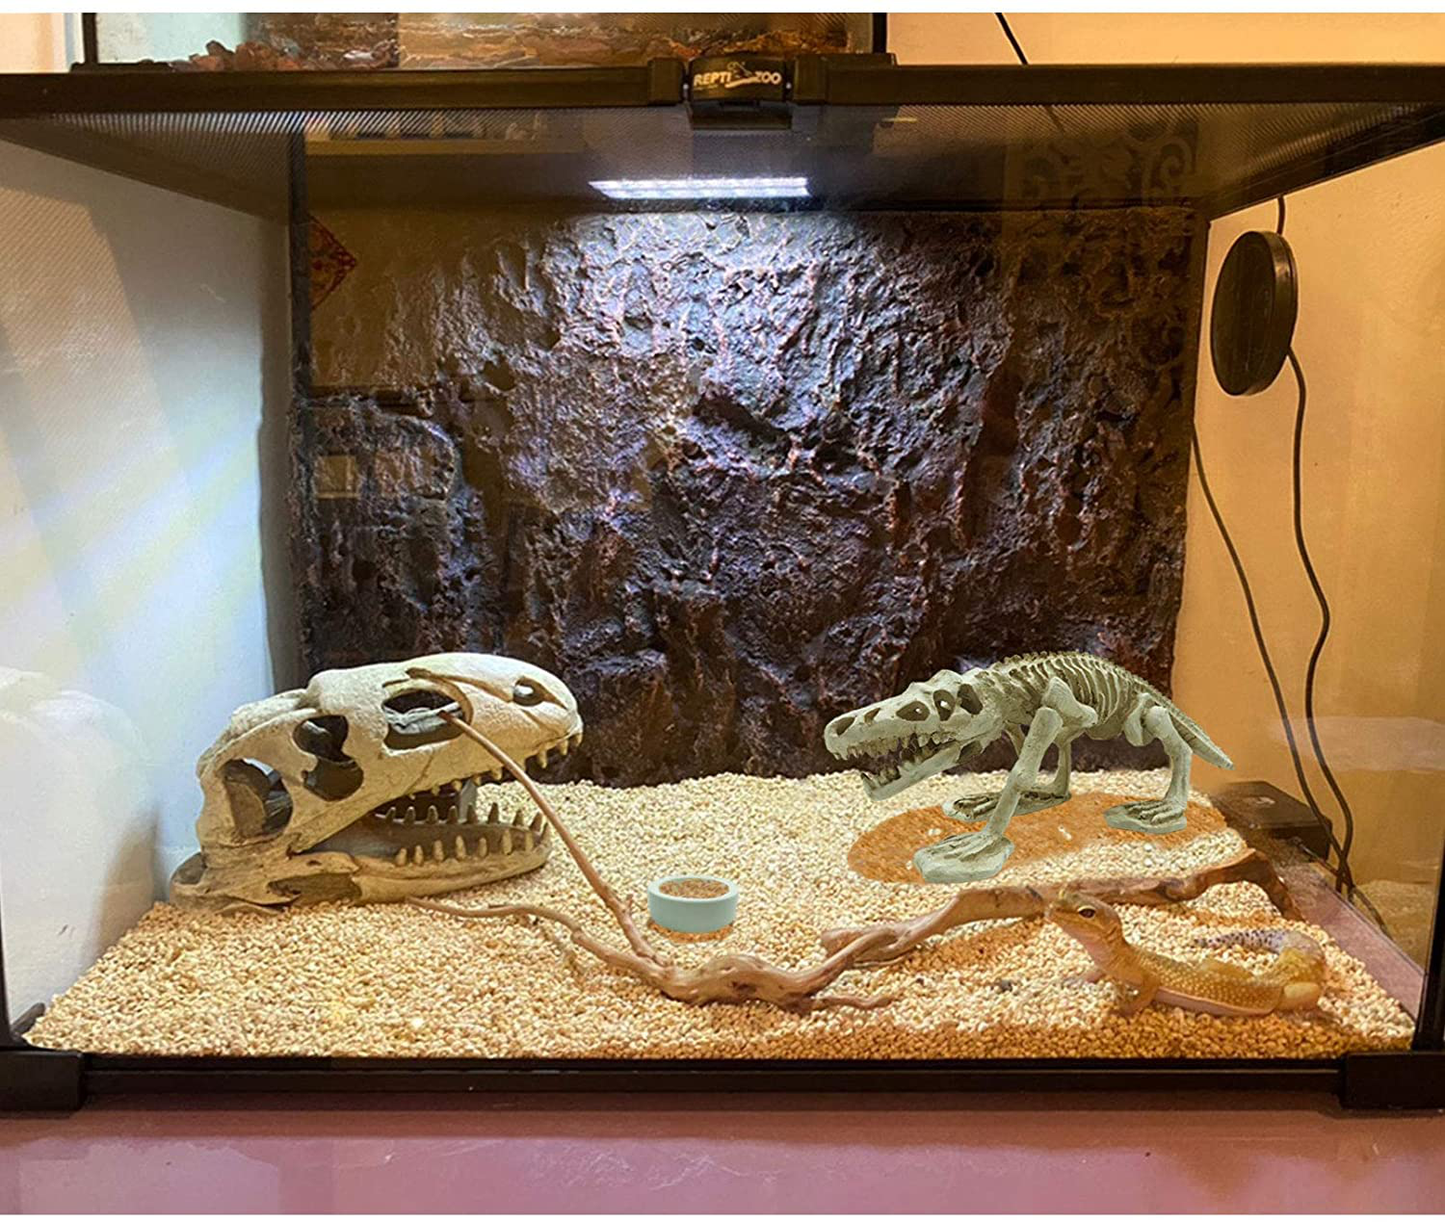 Tfwadmx Bearded Dragon Tank Accessories Resin Dinosaur Skeleton Decoration Artificial Dinosaur Fossil Reptile Ornament Habitat Bone Landscaping Decor or Gecko,Snakes,Lizard and Fish(4 Pcs)